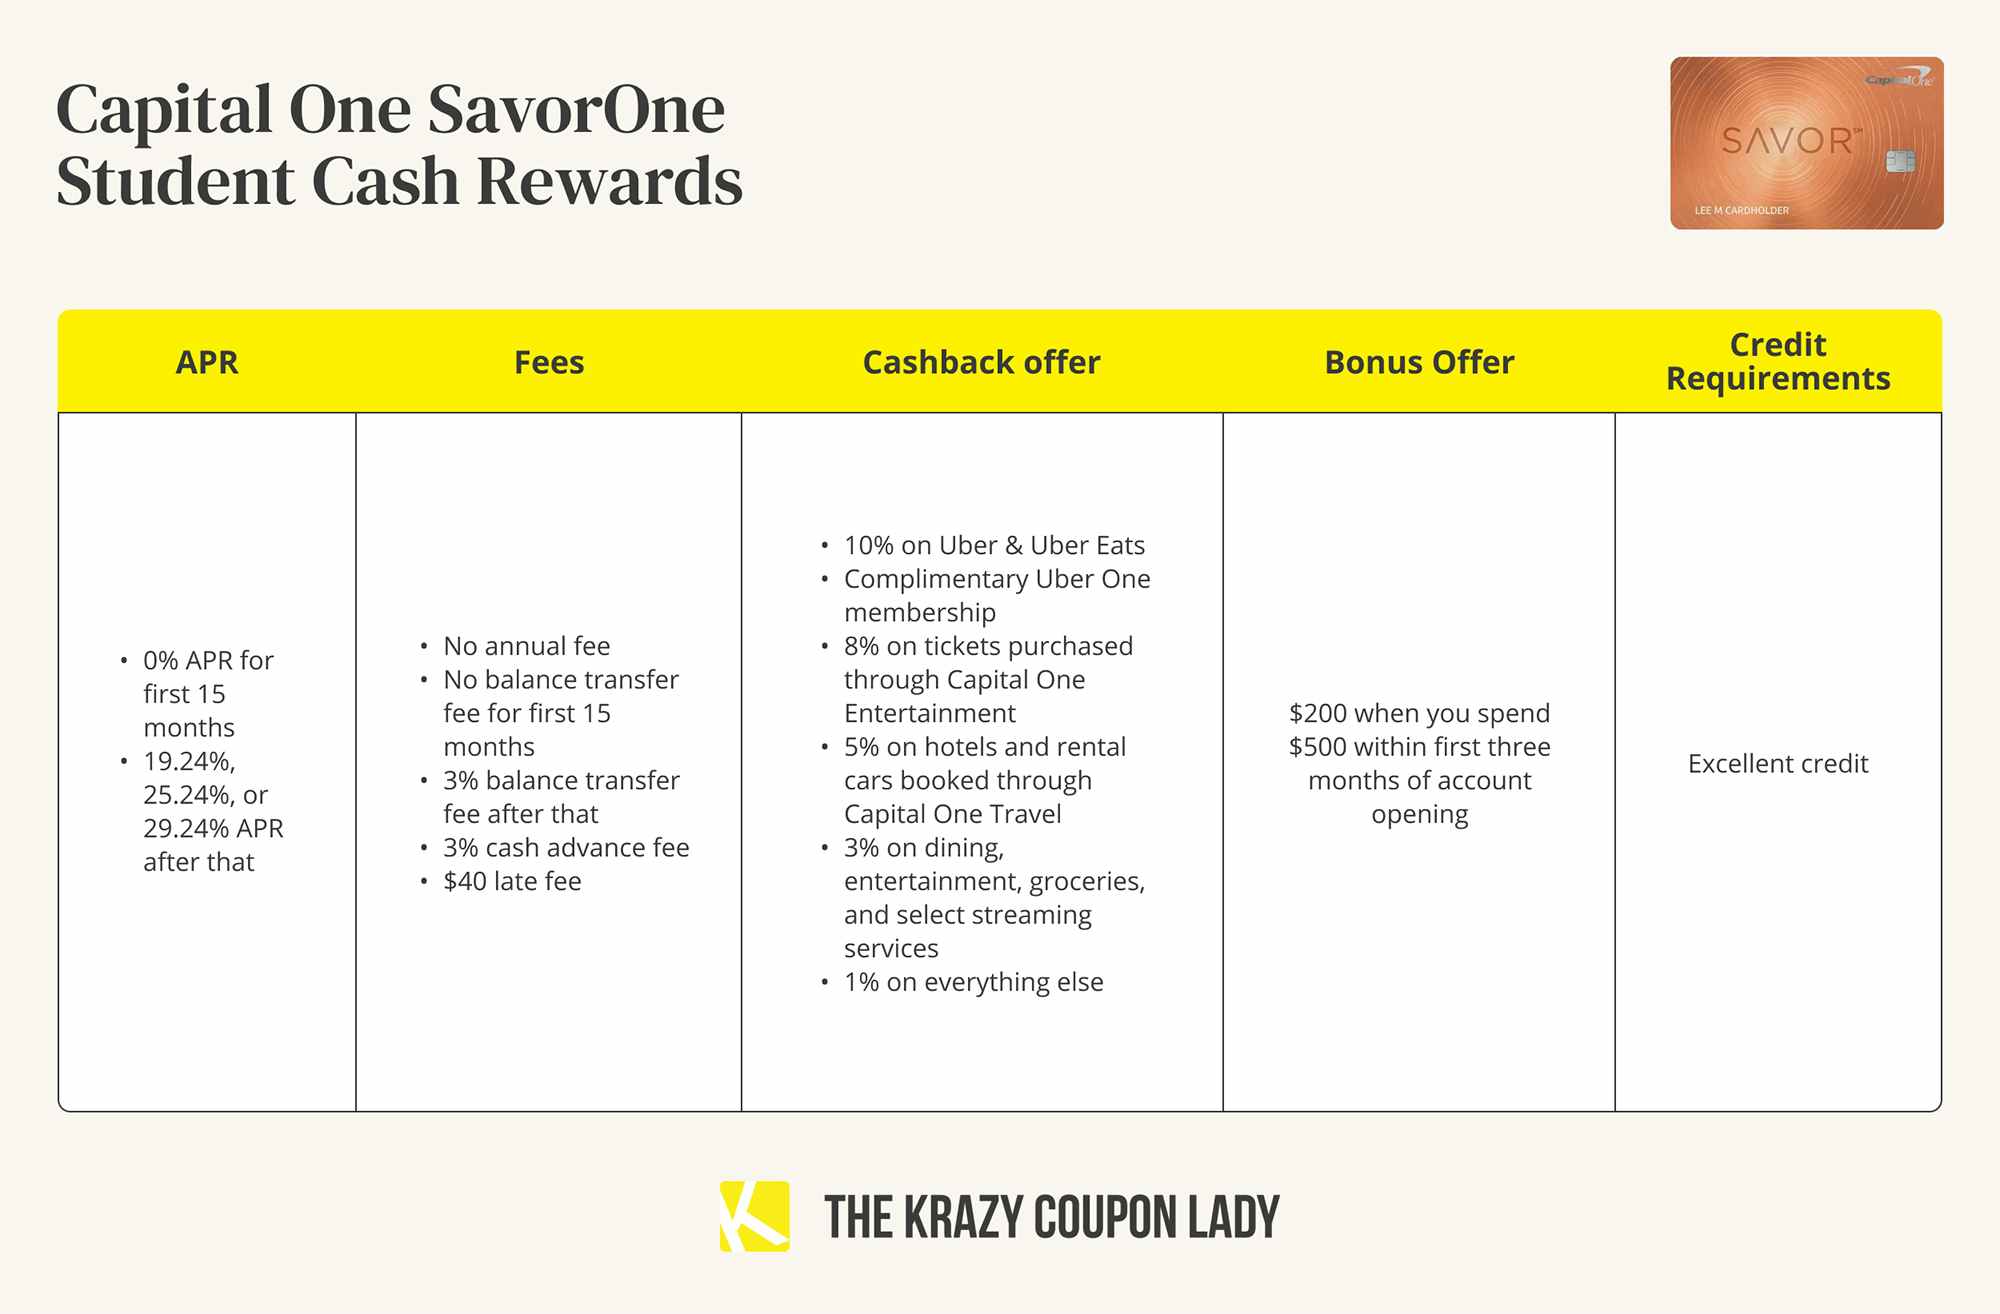 capital one savorone student cash rewards credit card details graphic